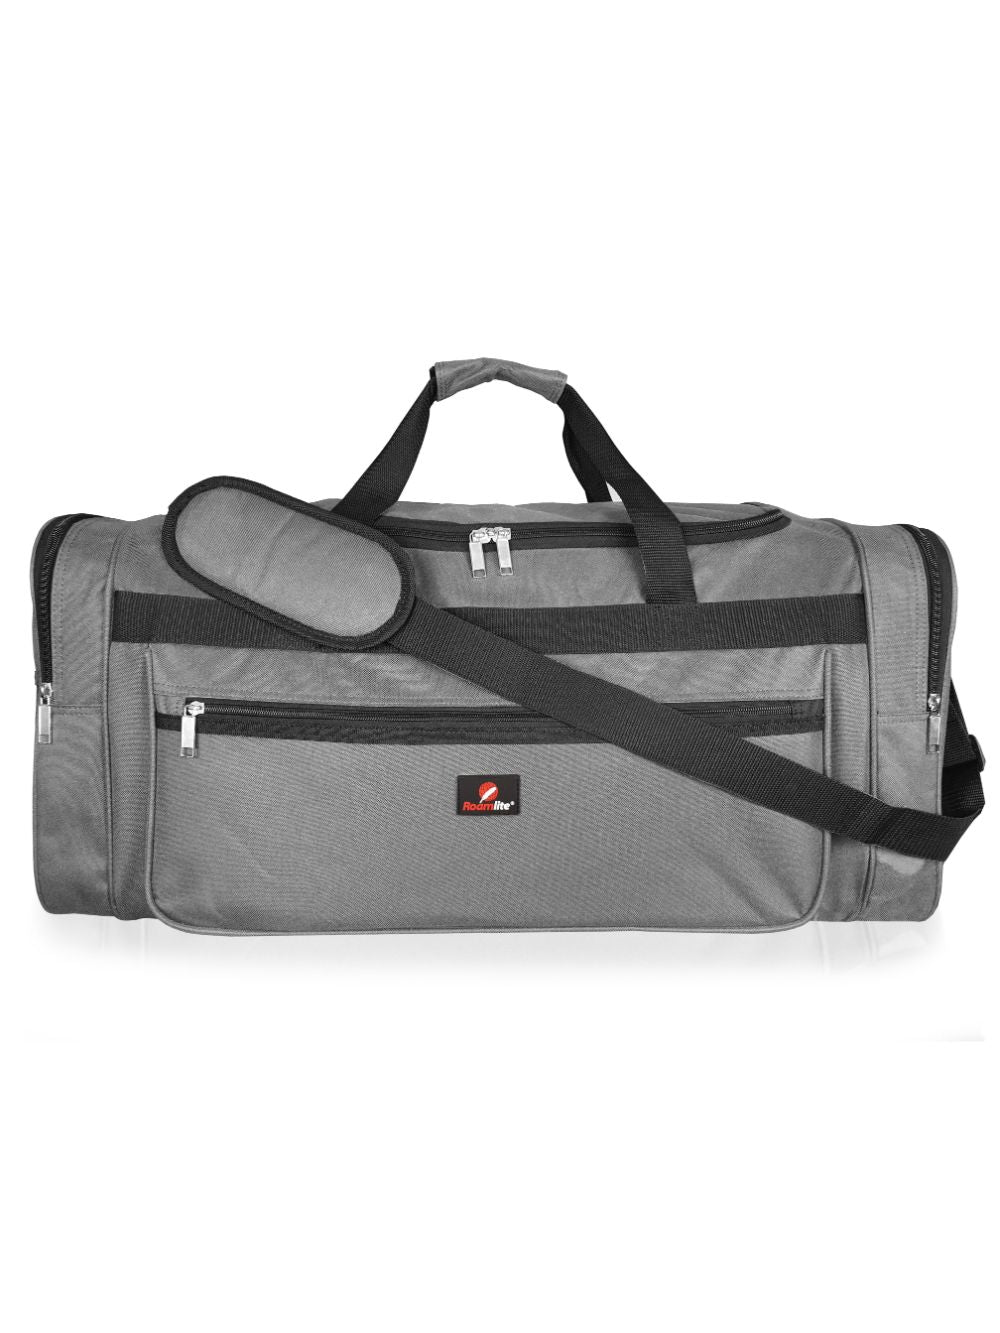 Roamlite Extra Large Size 2-X-L Duffel Bag - Very Big Holdall, Cargo Travel  Luggage - 100 Litre 30 Inch, L76 cm xW34cm xH37cm - Plain Black RL30K